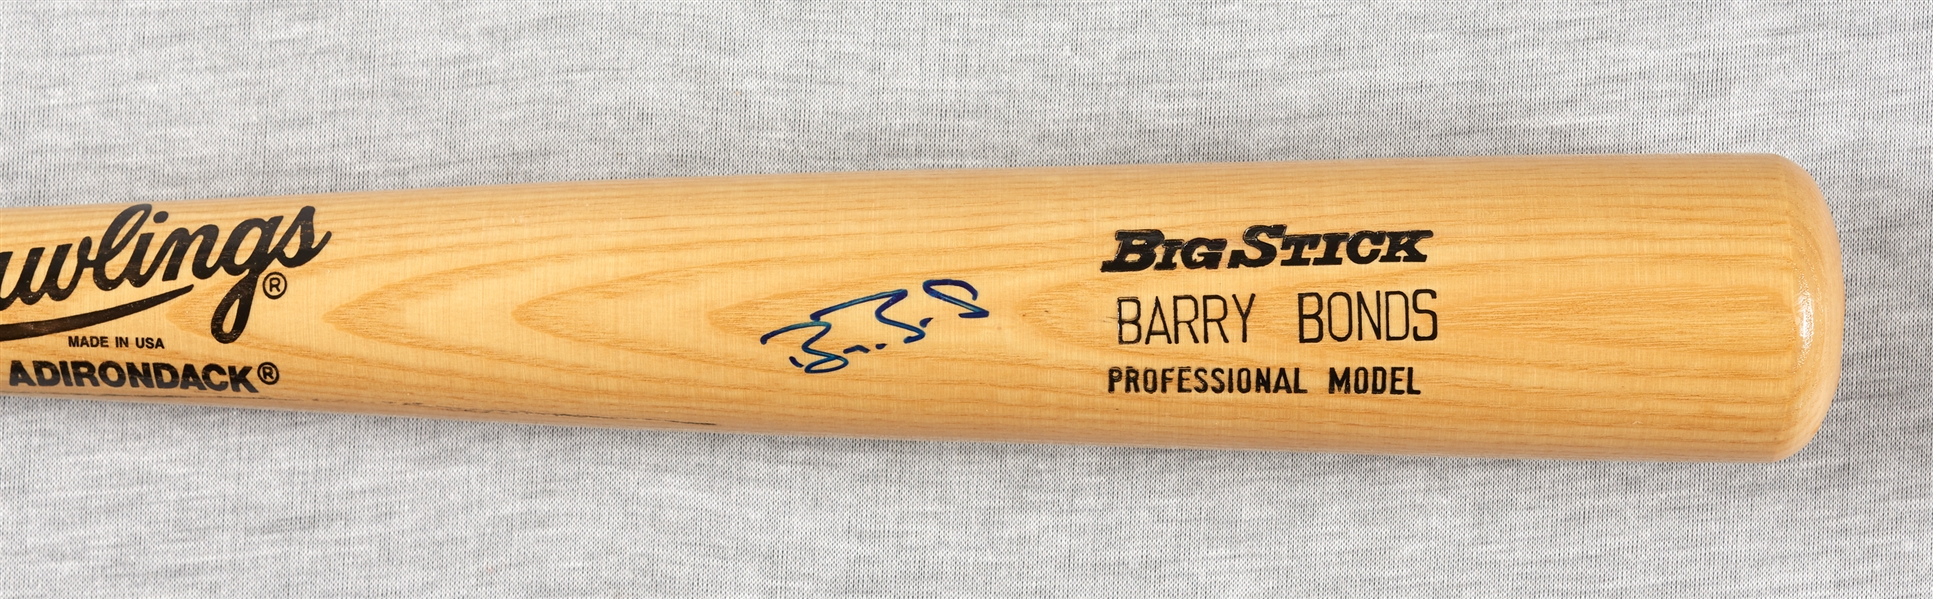 Barry Bonds Signed Rawlings Bat (JSA)